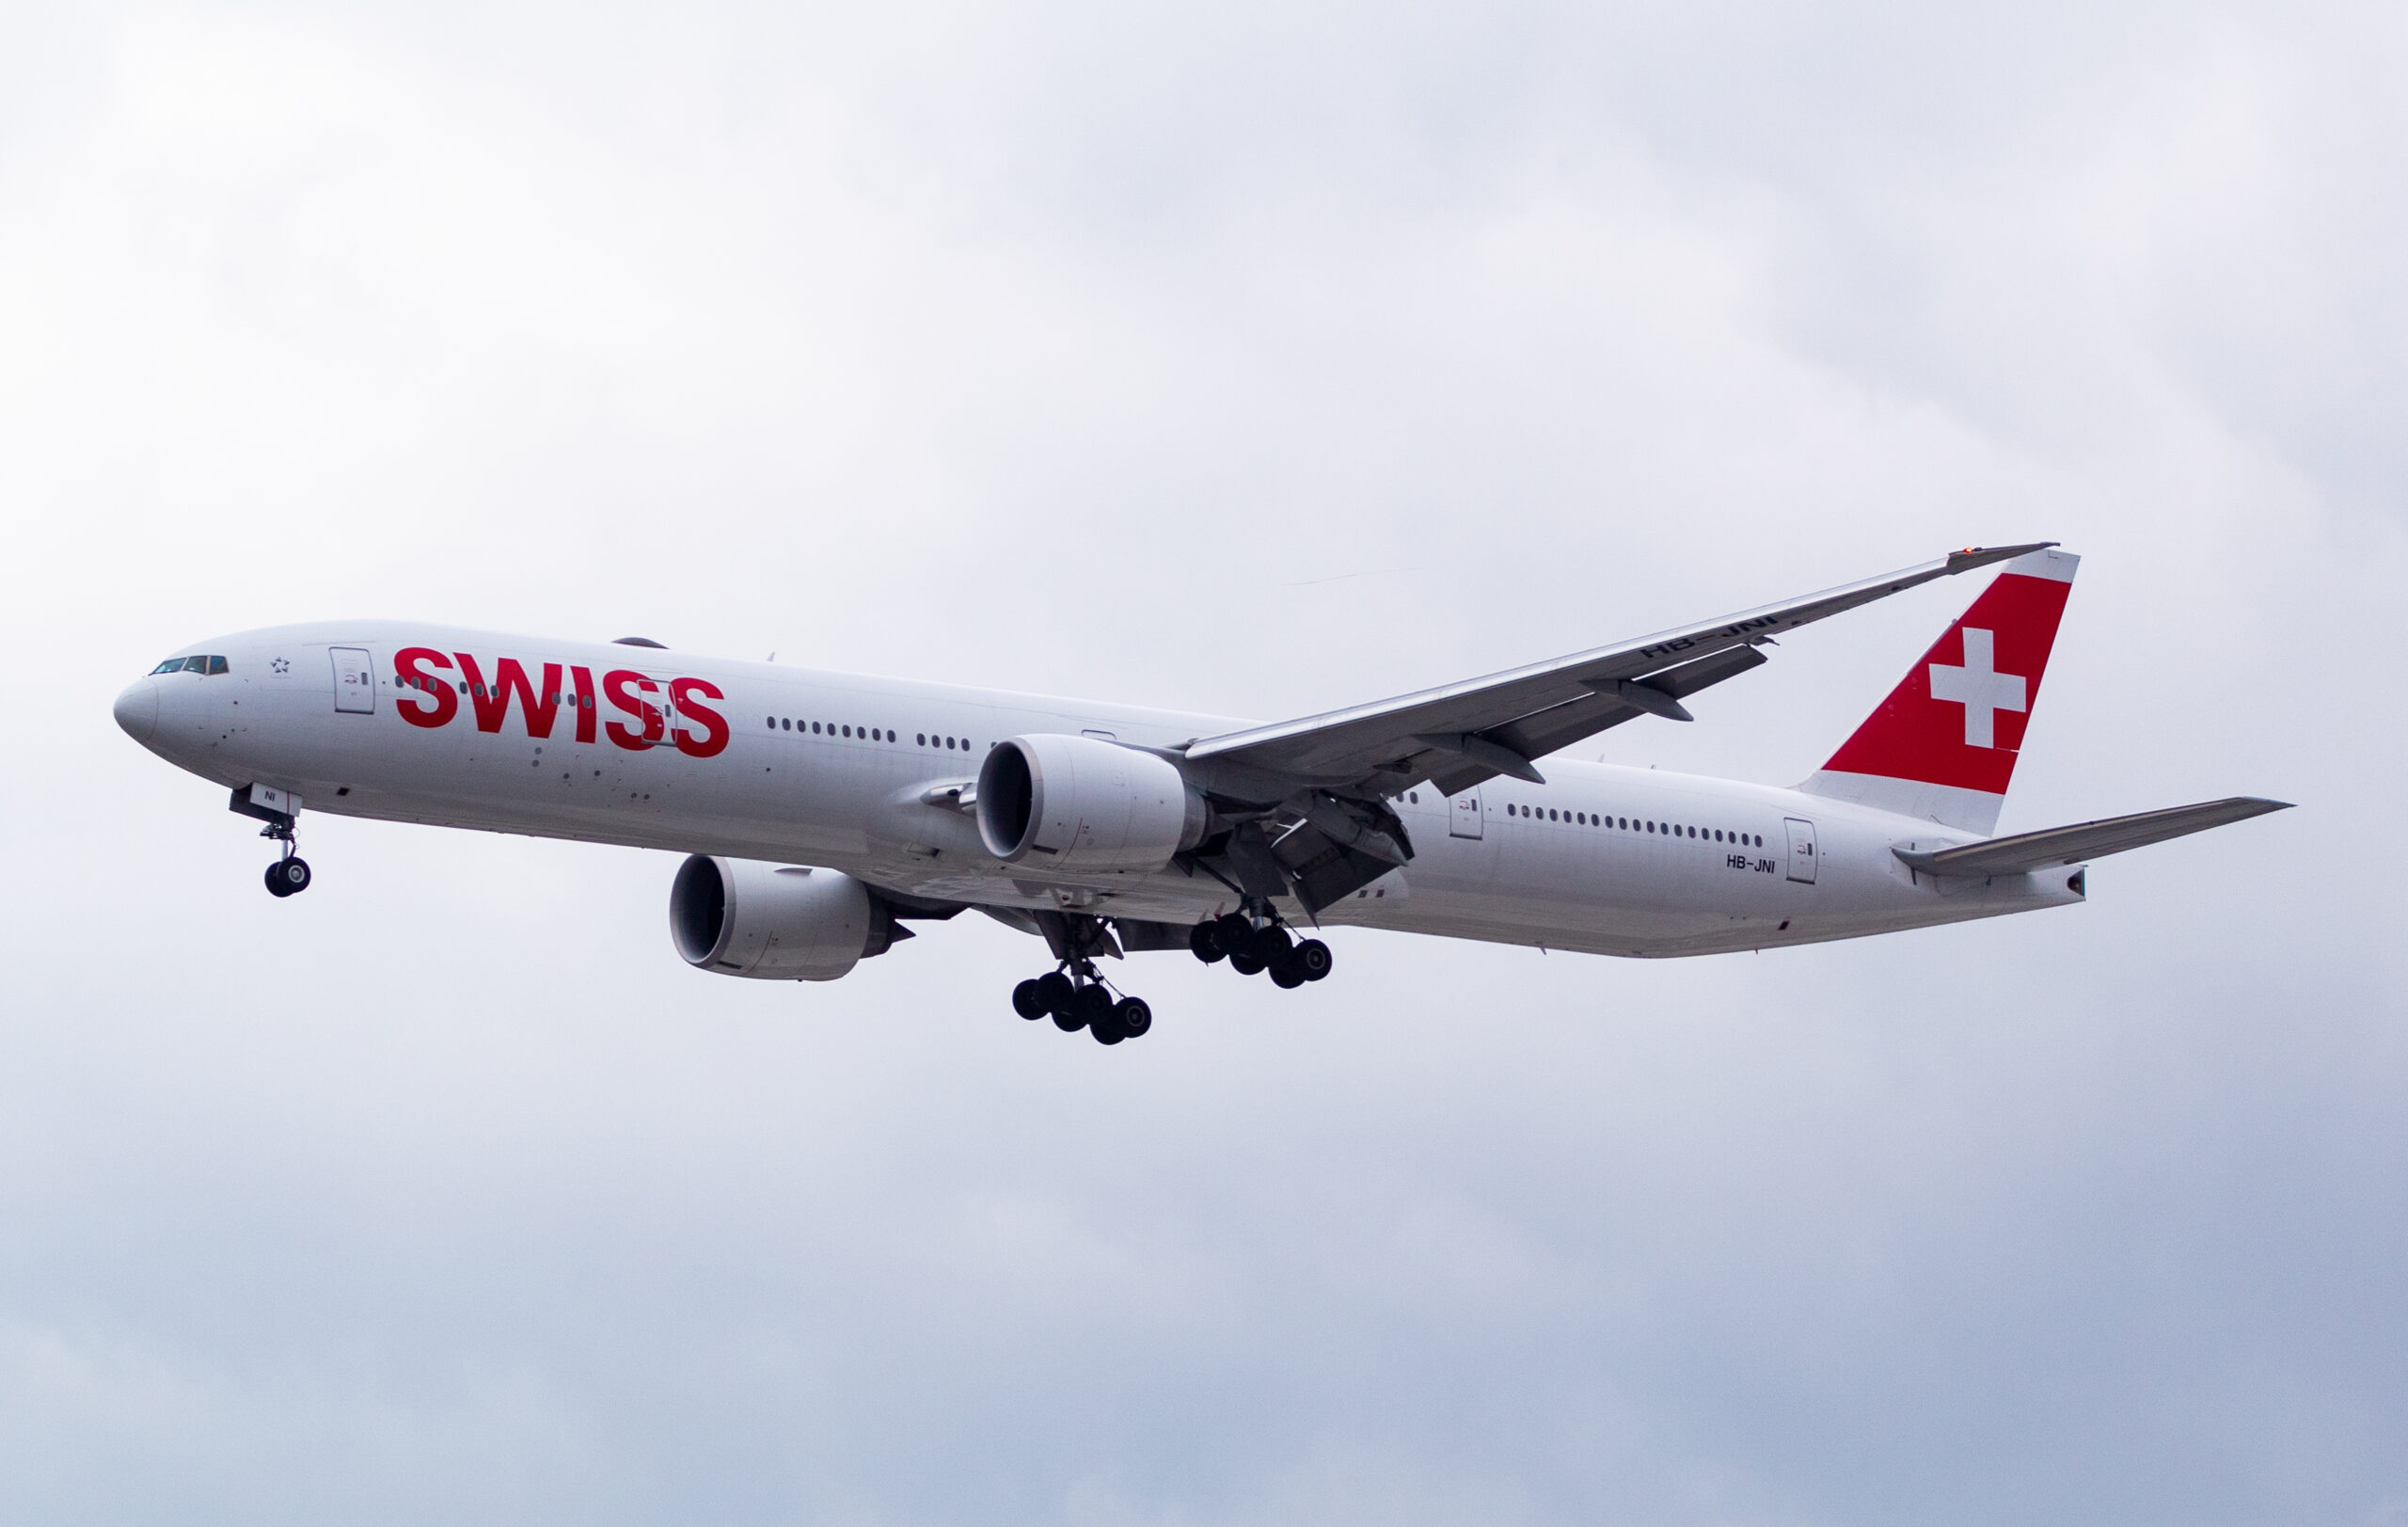 HB-JNI - Boeing 777-3DEER - Swiss - Blog do Spotter